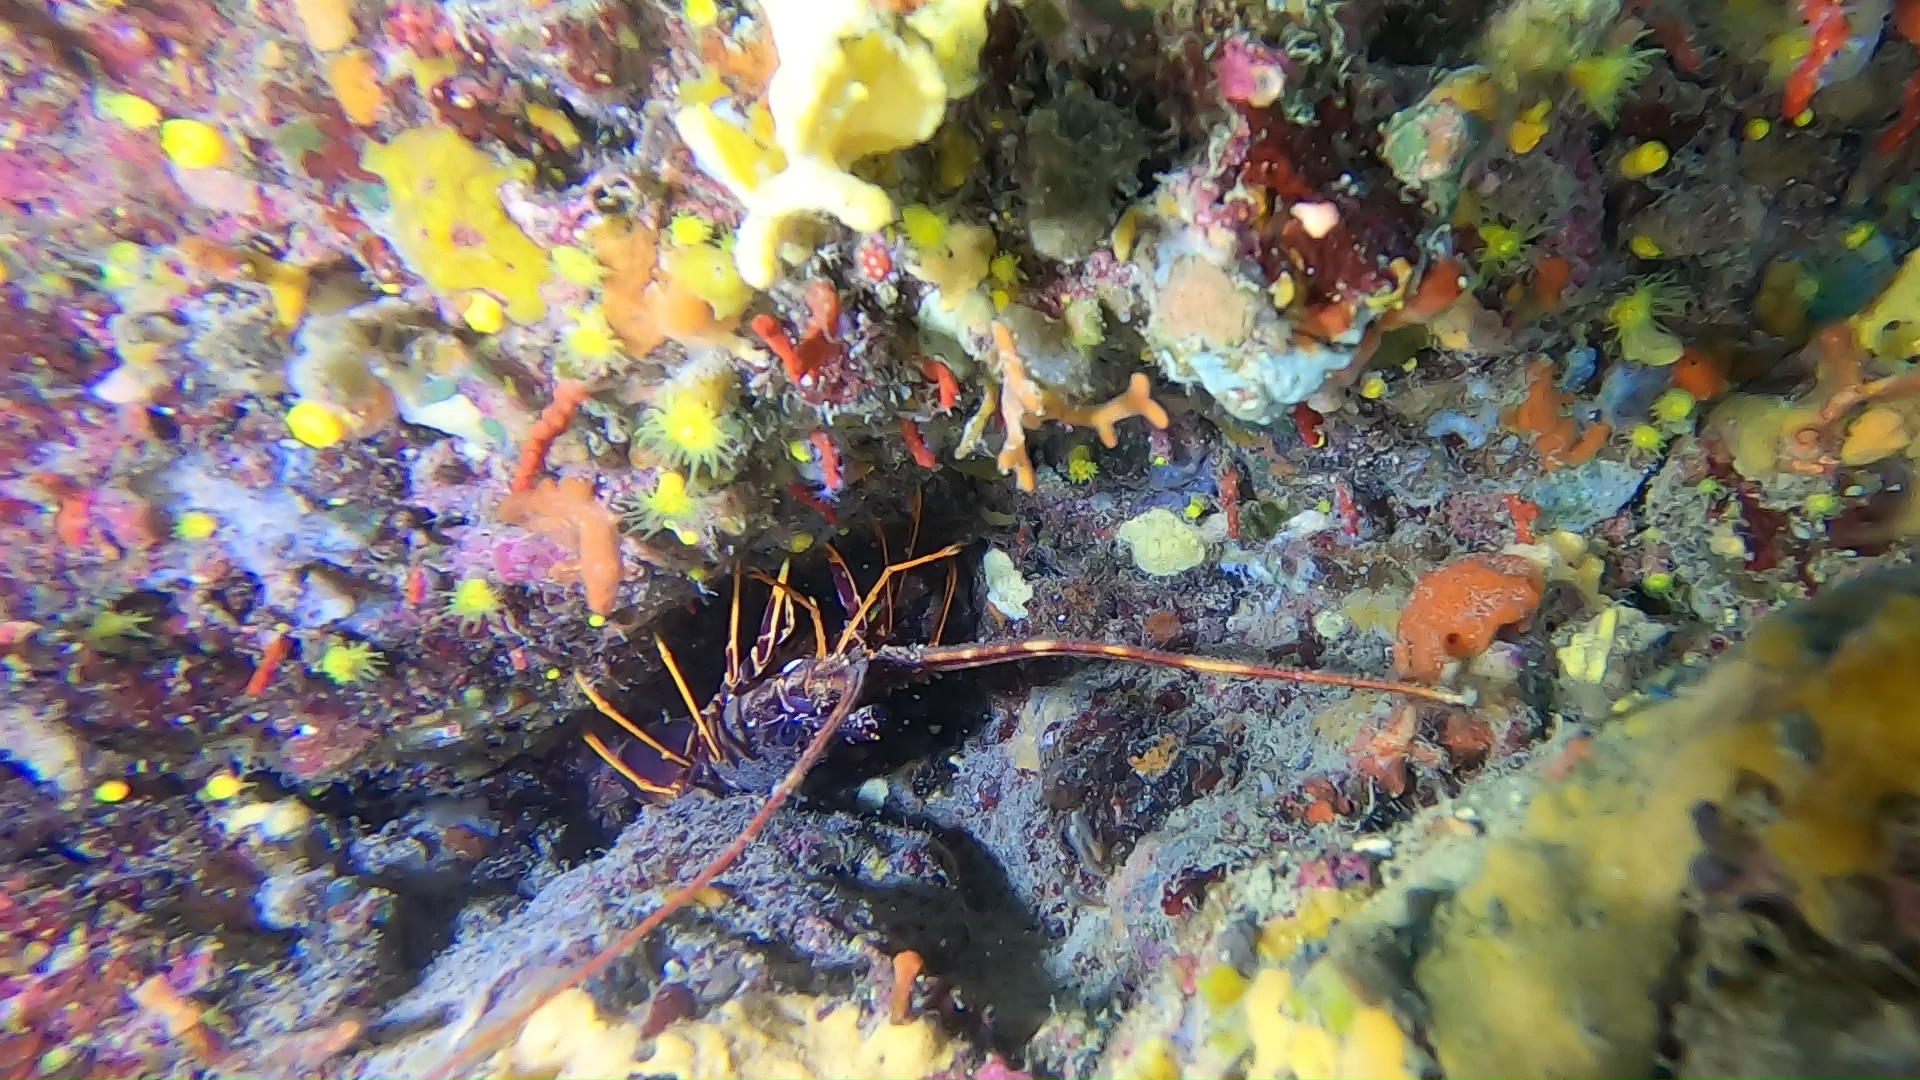 Aragosta Mediterranea Palinurus elephas Spiny lobster - Corallo Rosso - Corallium Rubrum - intotheblue.it